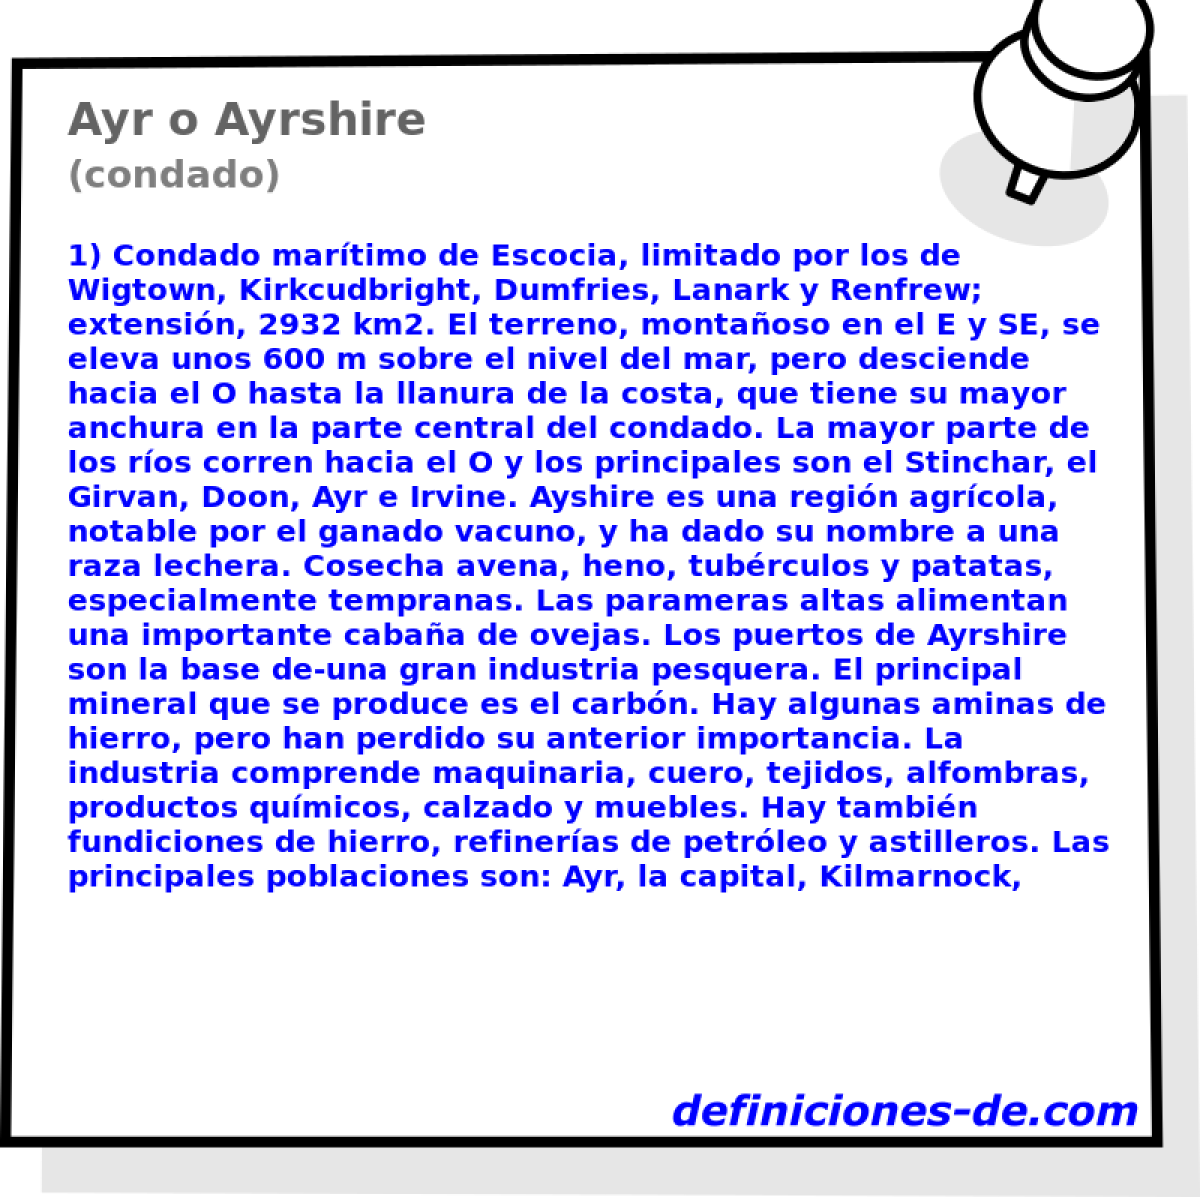 Ayr o Ayrshire (condado)